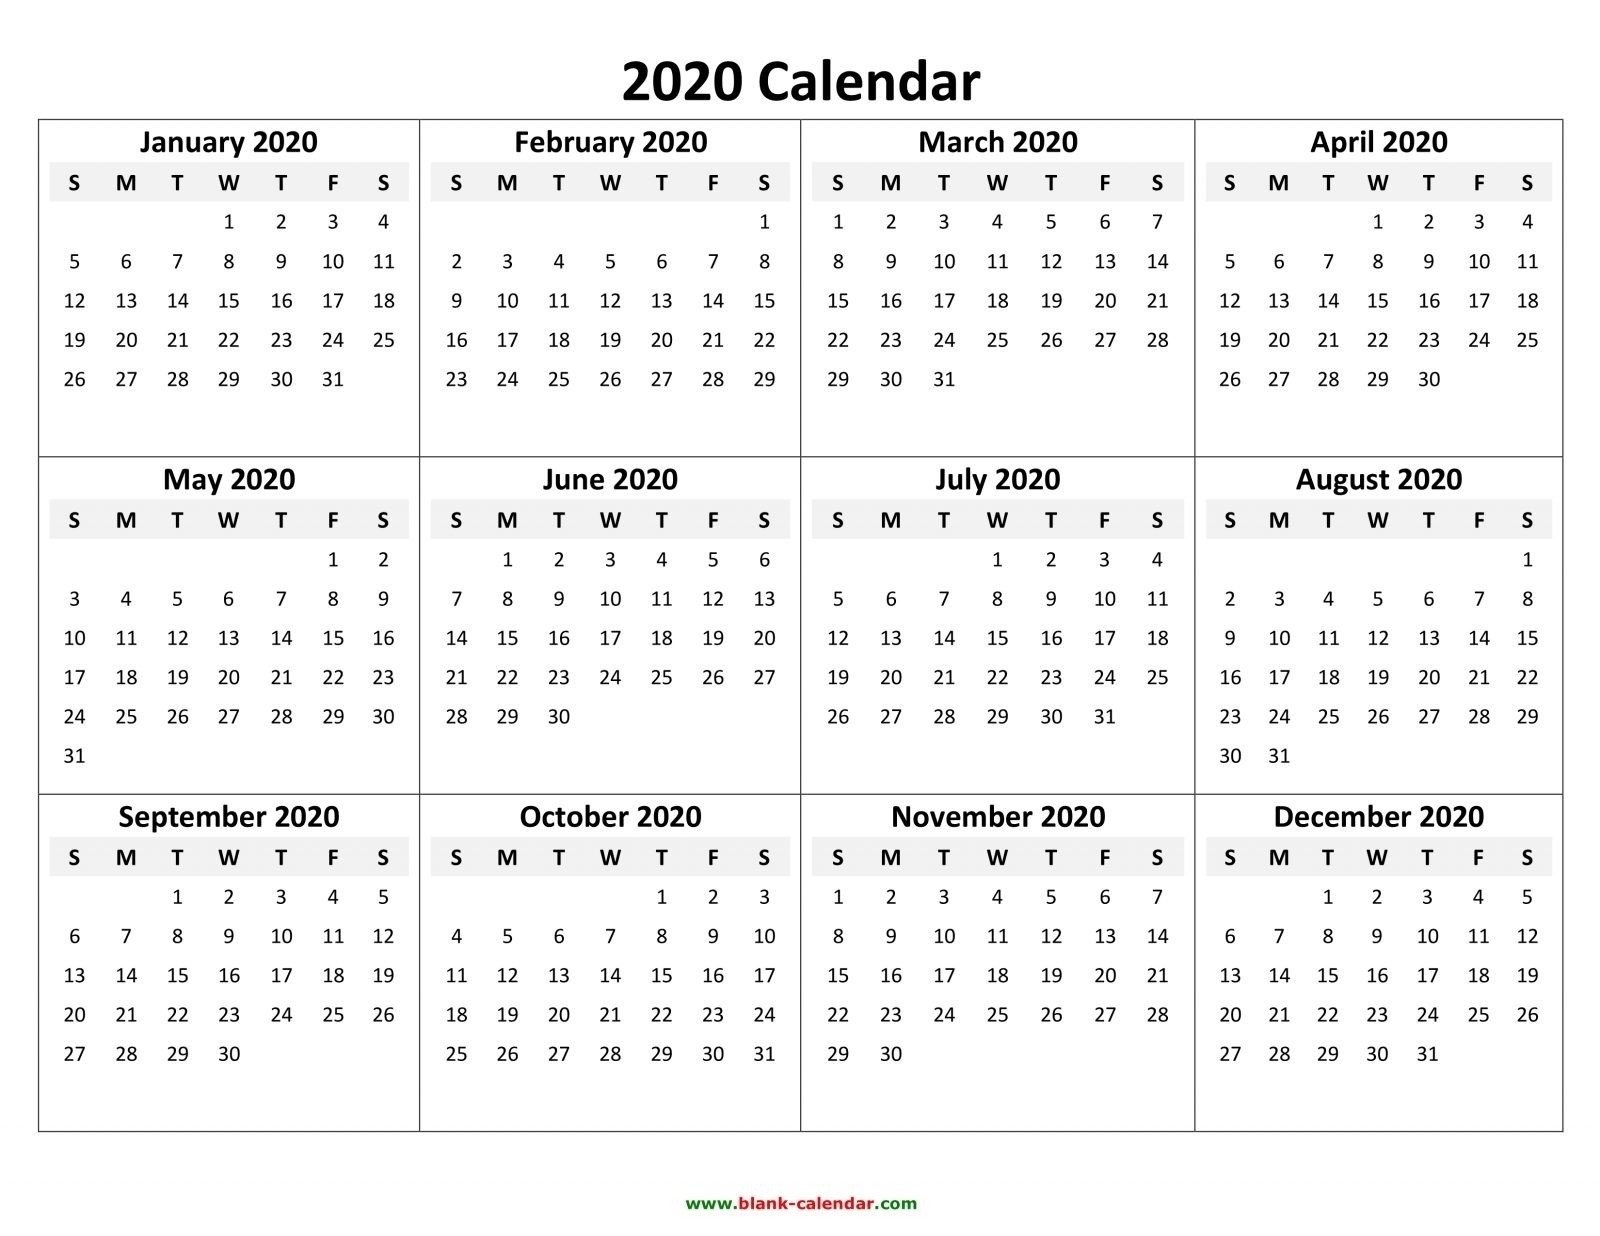 Perky 2020 Calendar With Holidays By Vertex42-2020 Calendare With Holidays By Vertex42.com